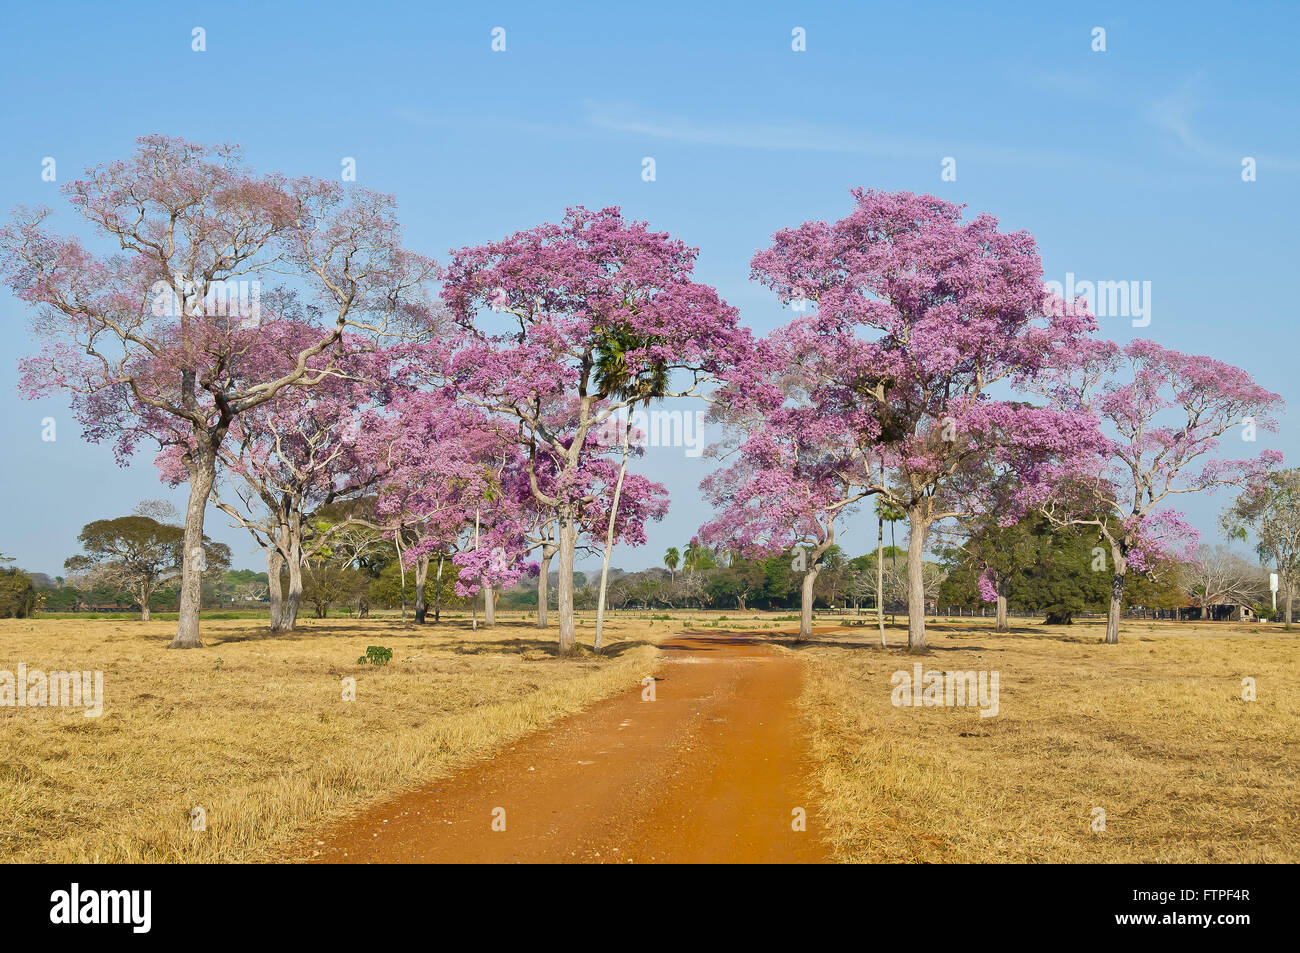 IPE-lila oder Rosa blühenden Ipe genannt auch Piuva das Pantanal - Tabebuia sp Stockfoto